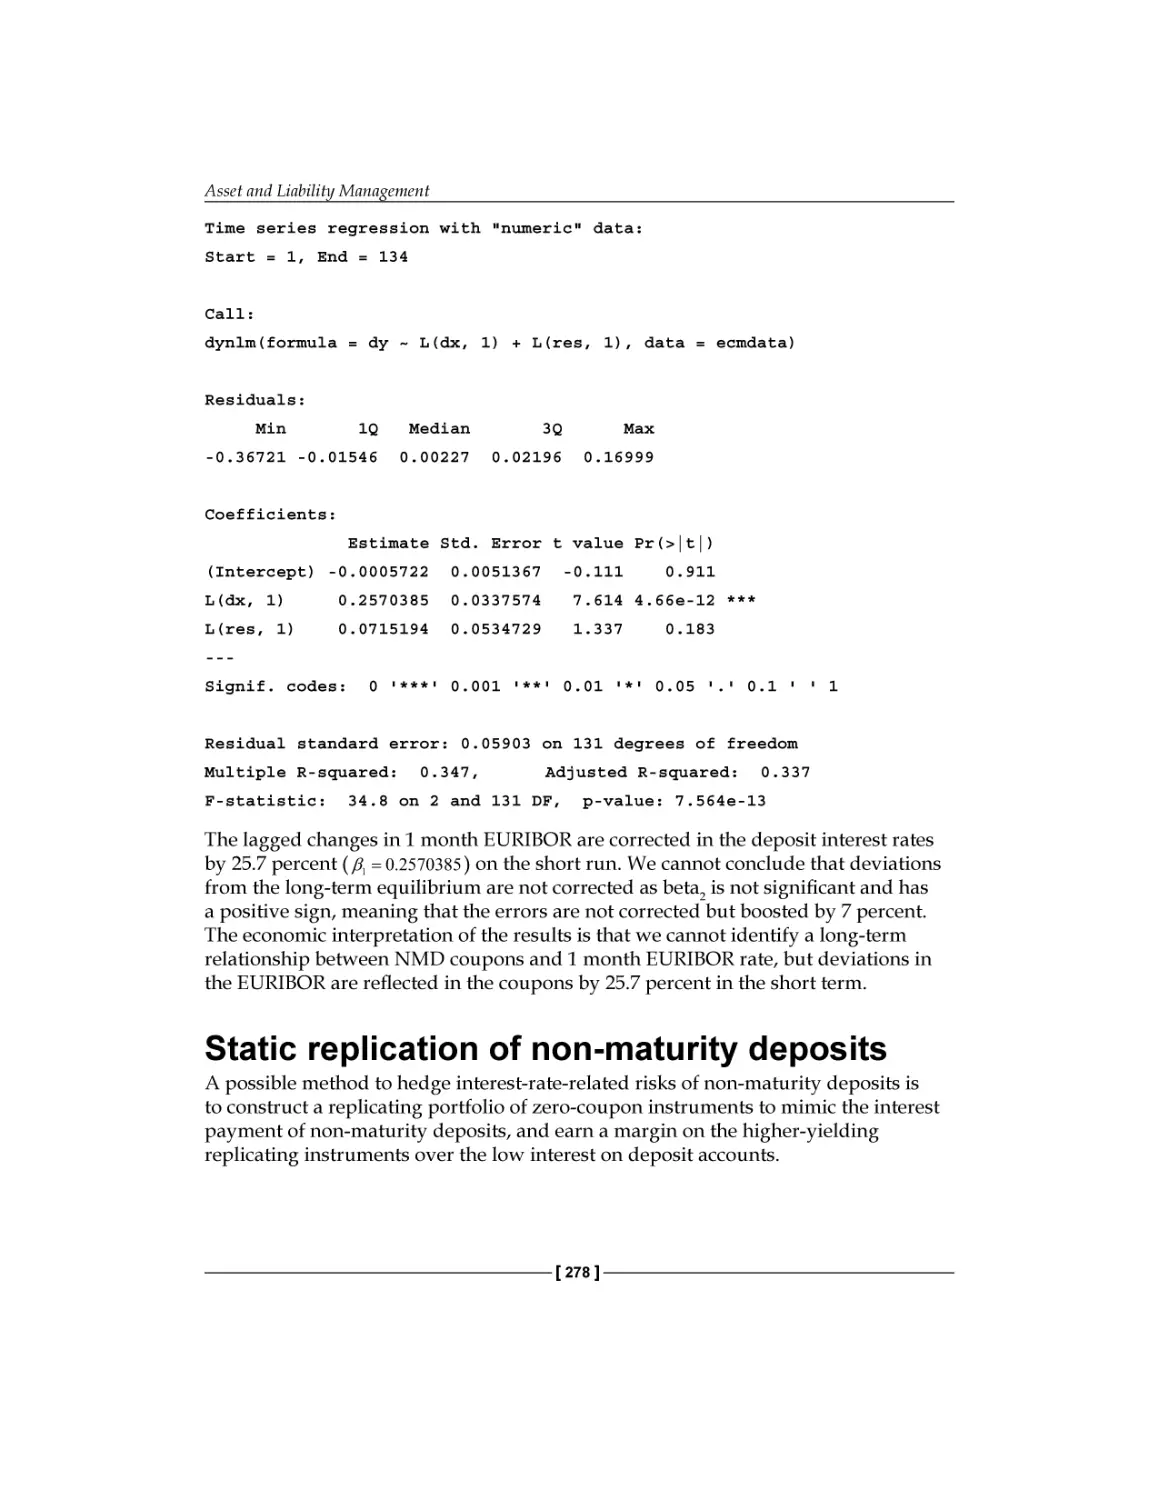 Static replication of non-maturity deposits